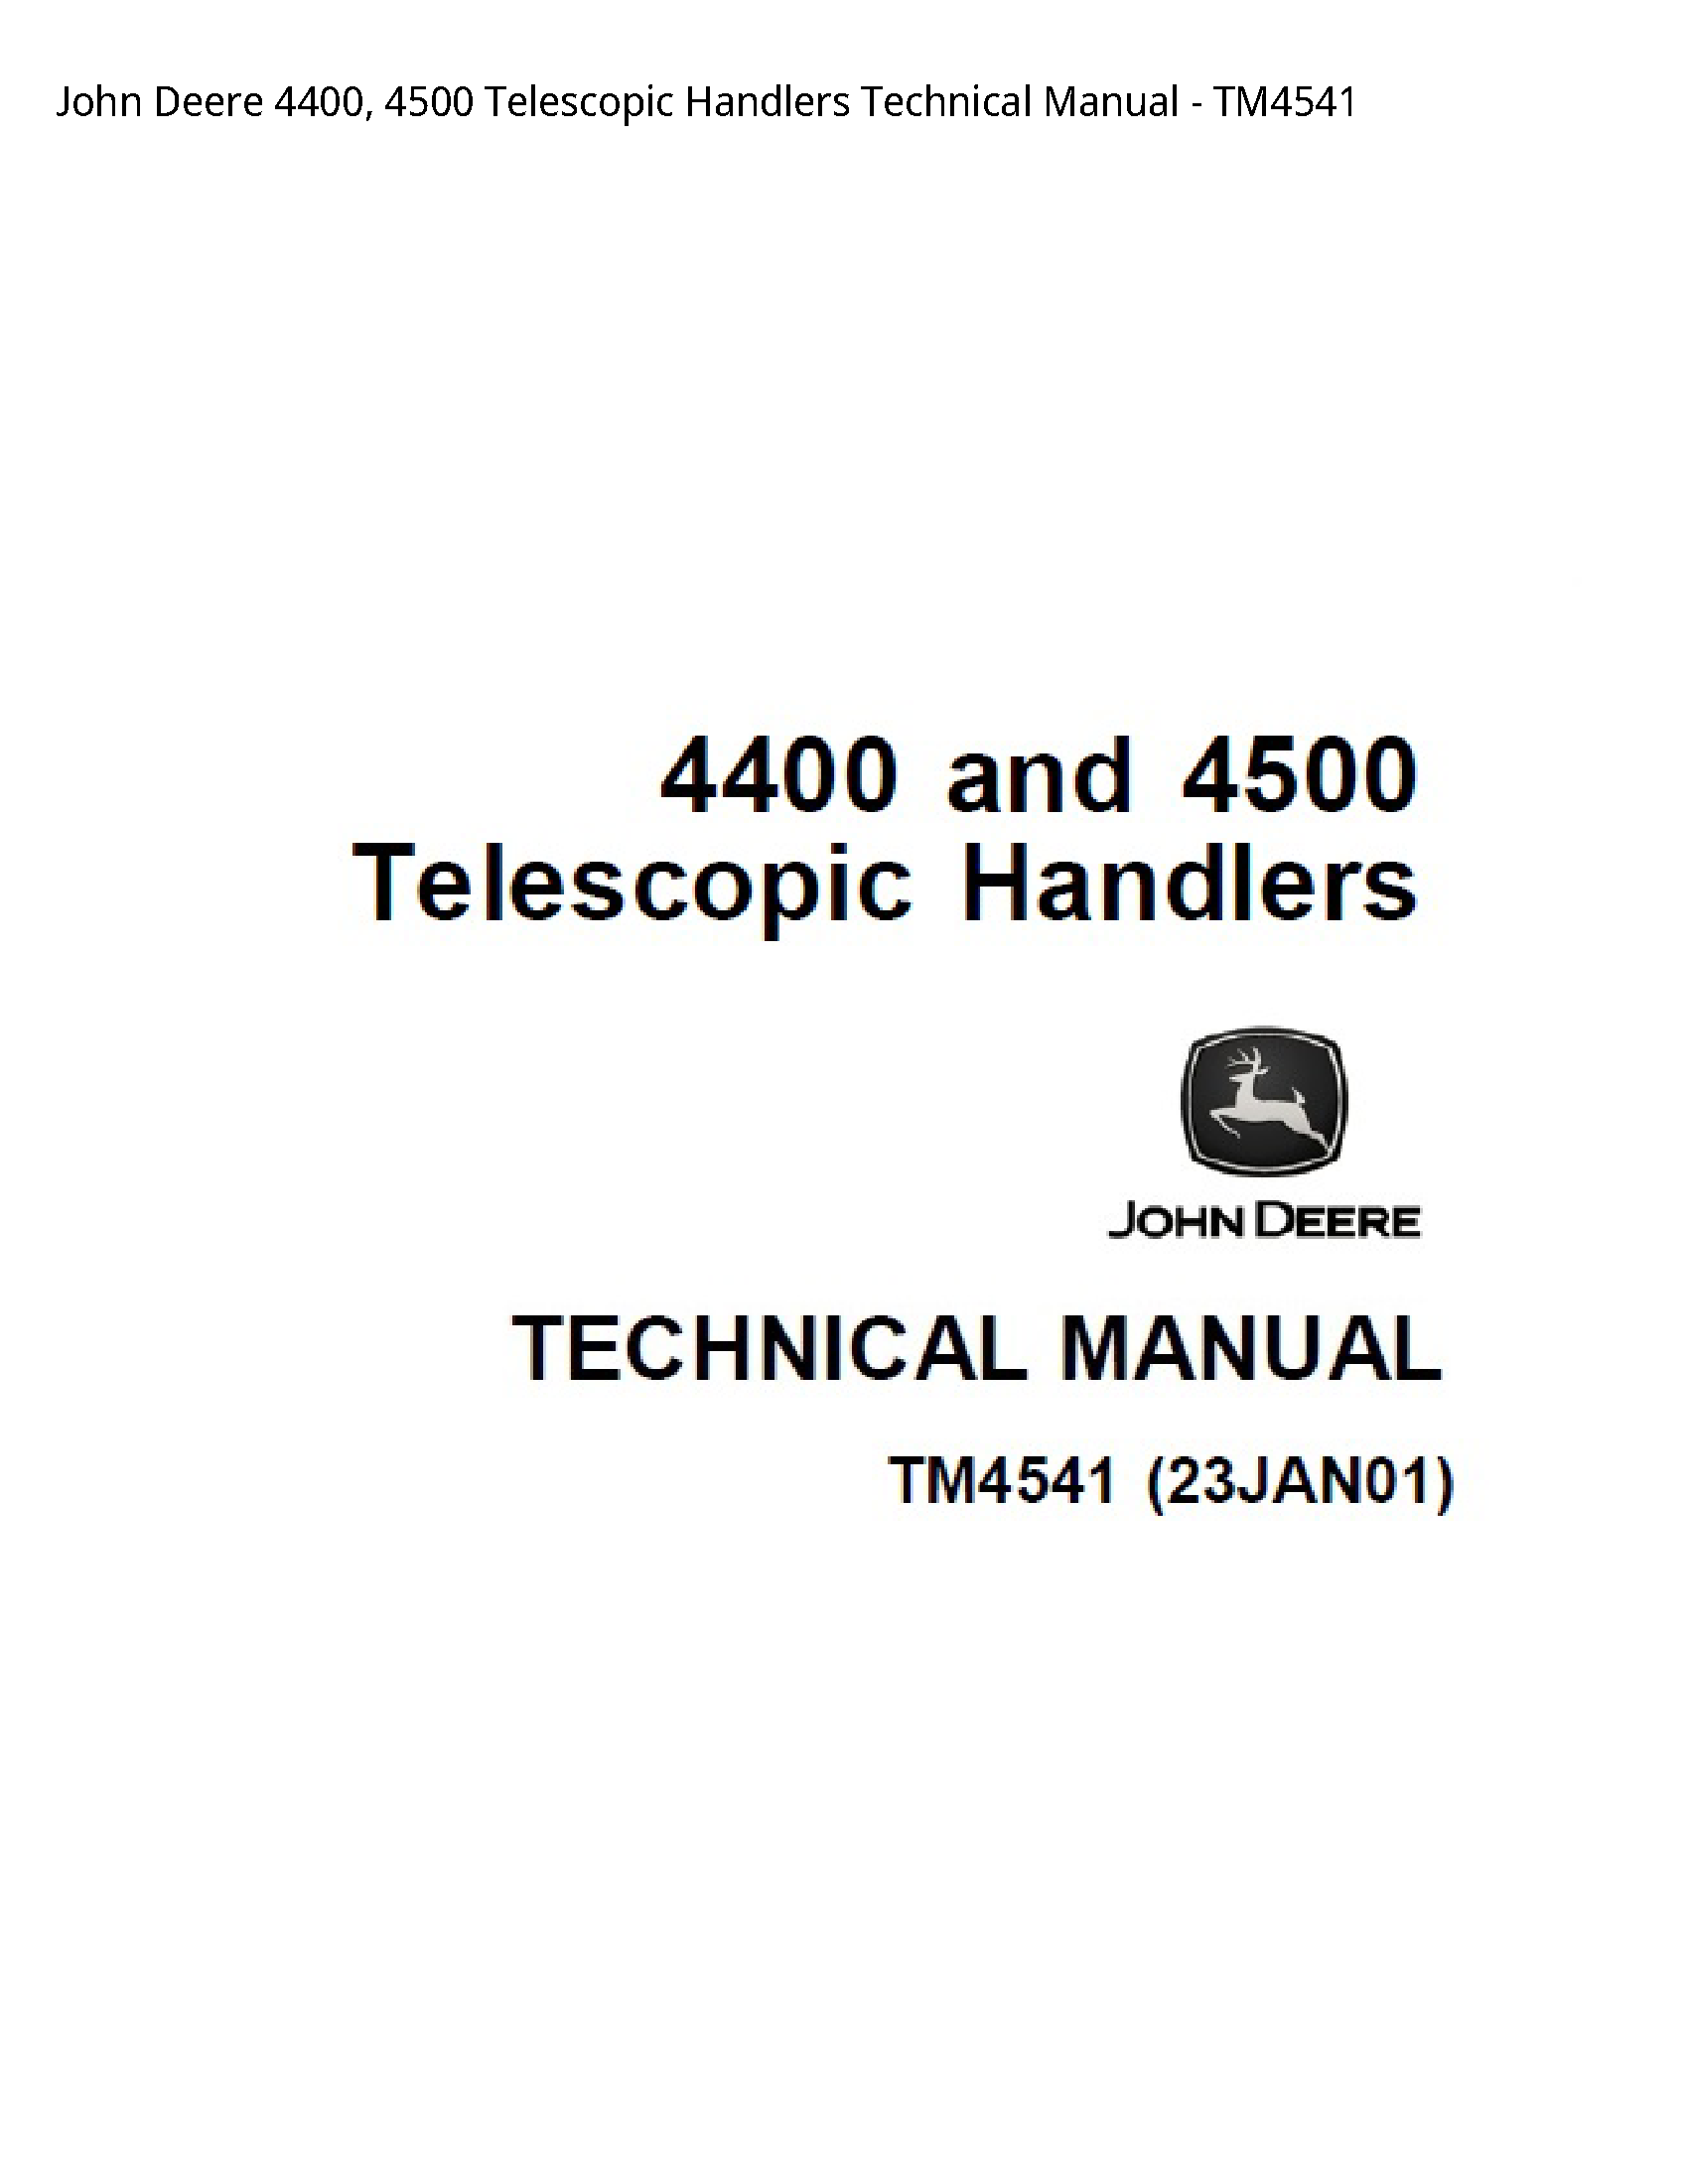 John Deere 4400 Telescopic Handlers Technical manual